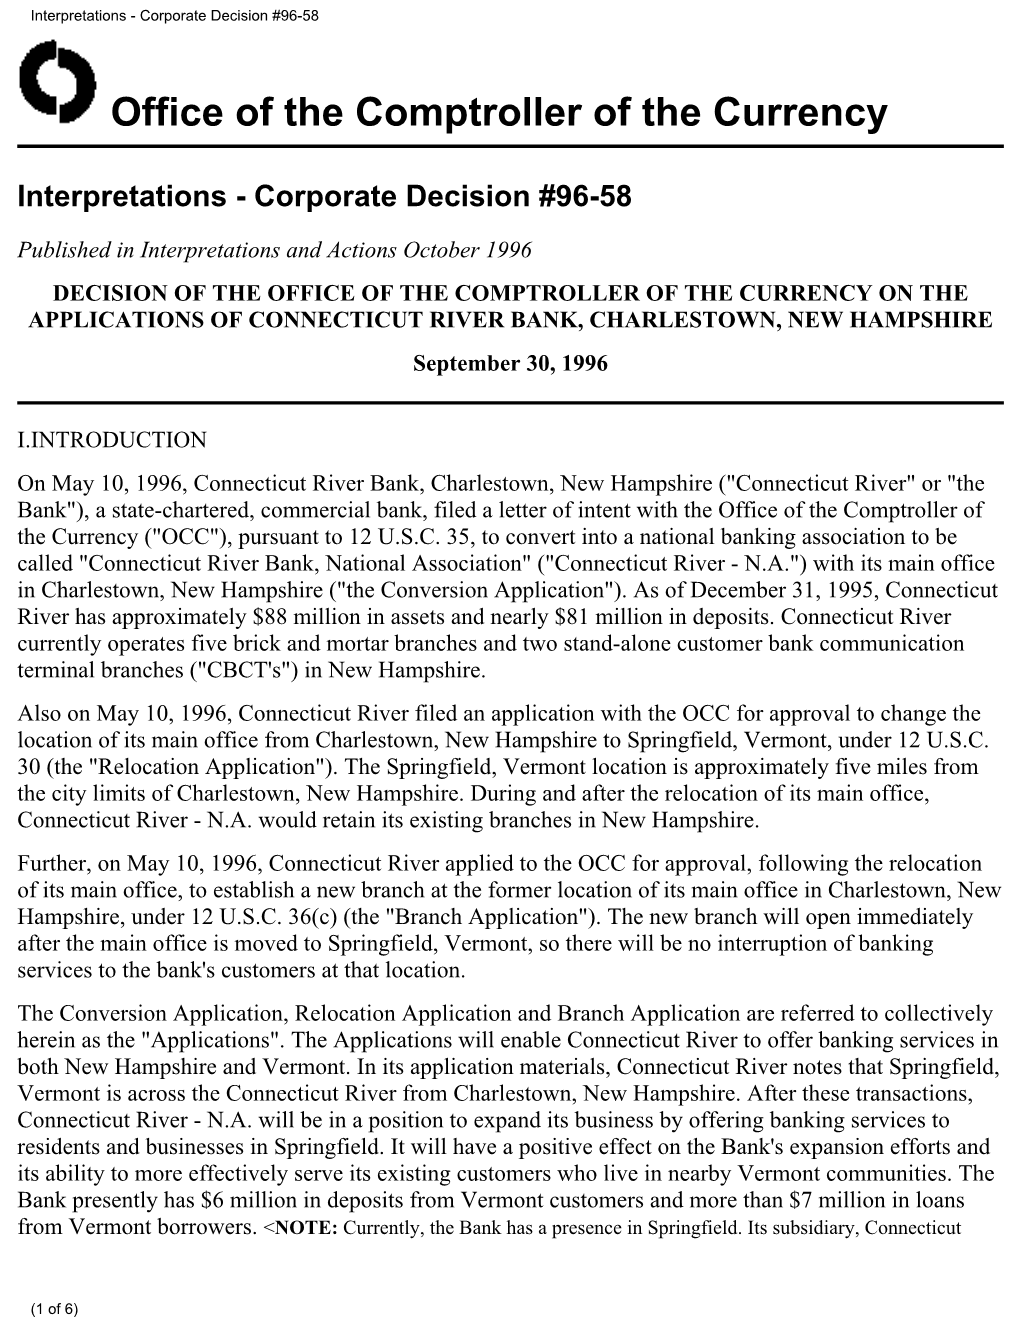 Interpretations - Corporate Decision #96-58